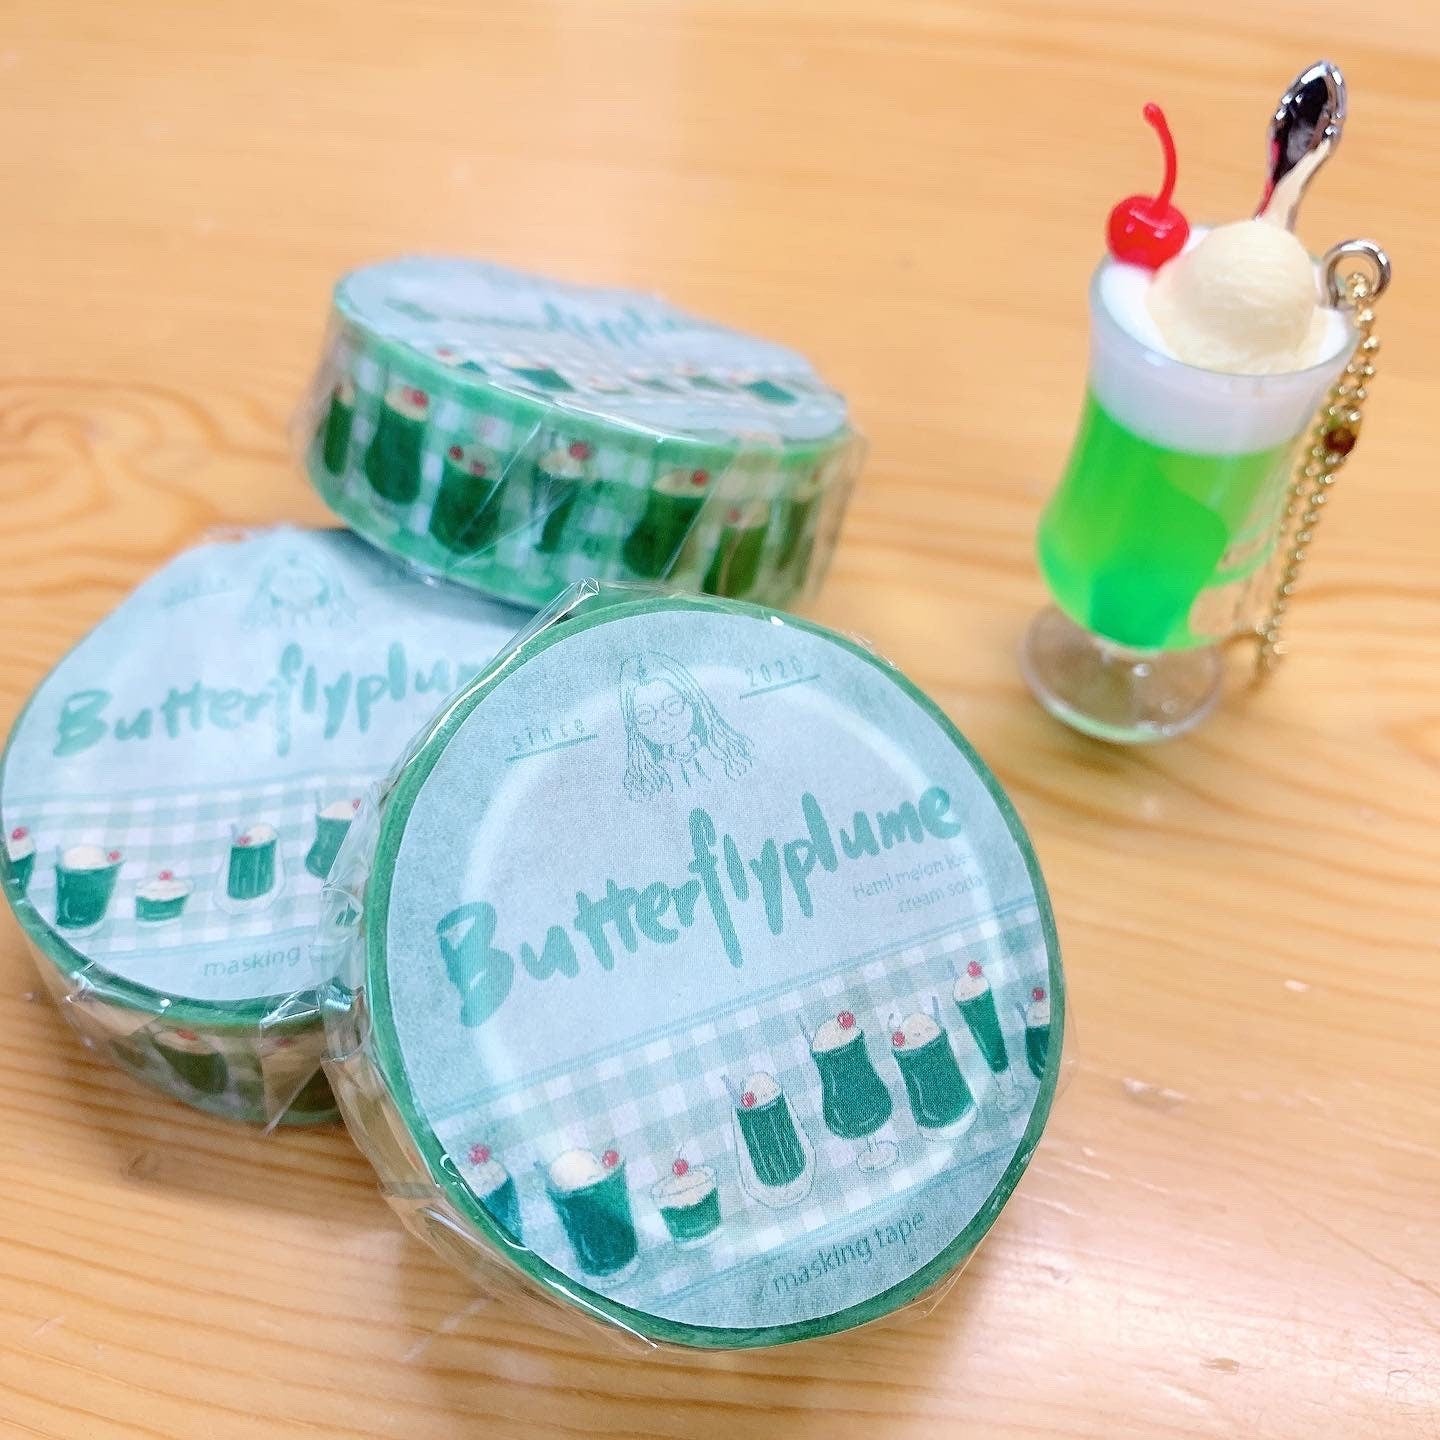 Butterflyplume washitape Hami Melon Cream Soda